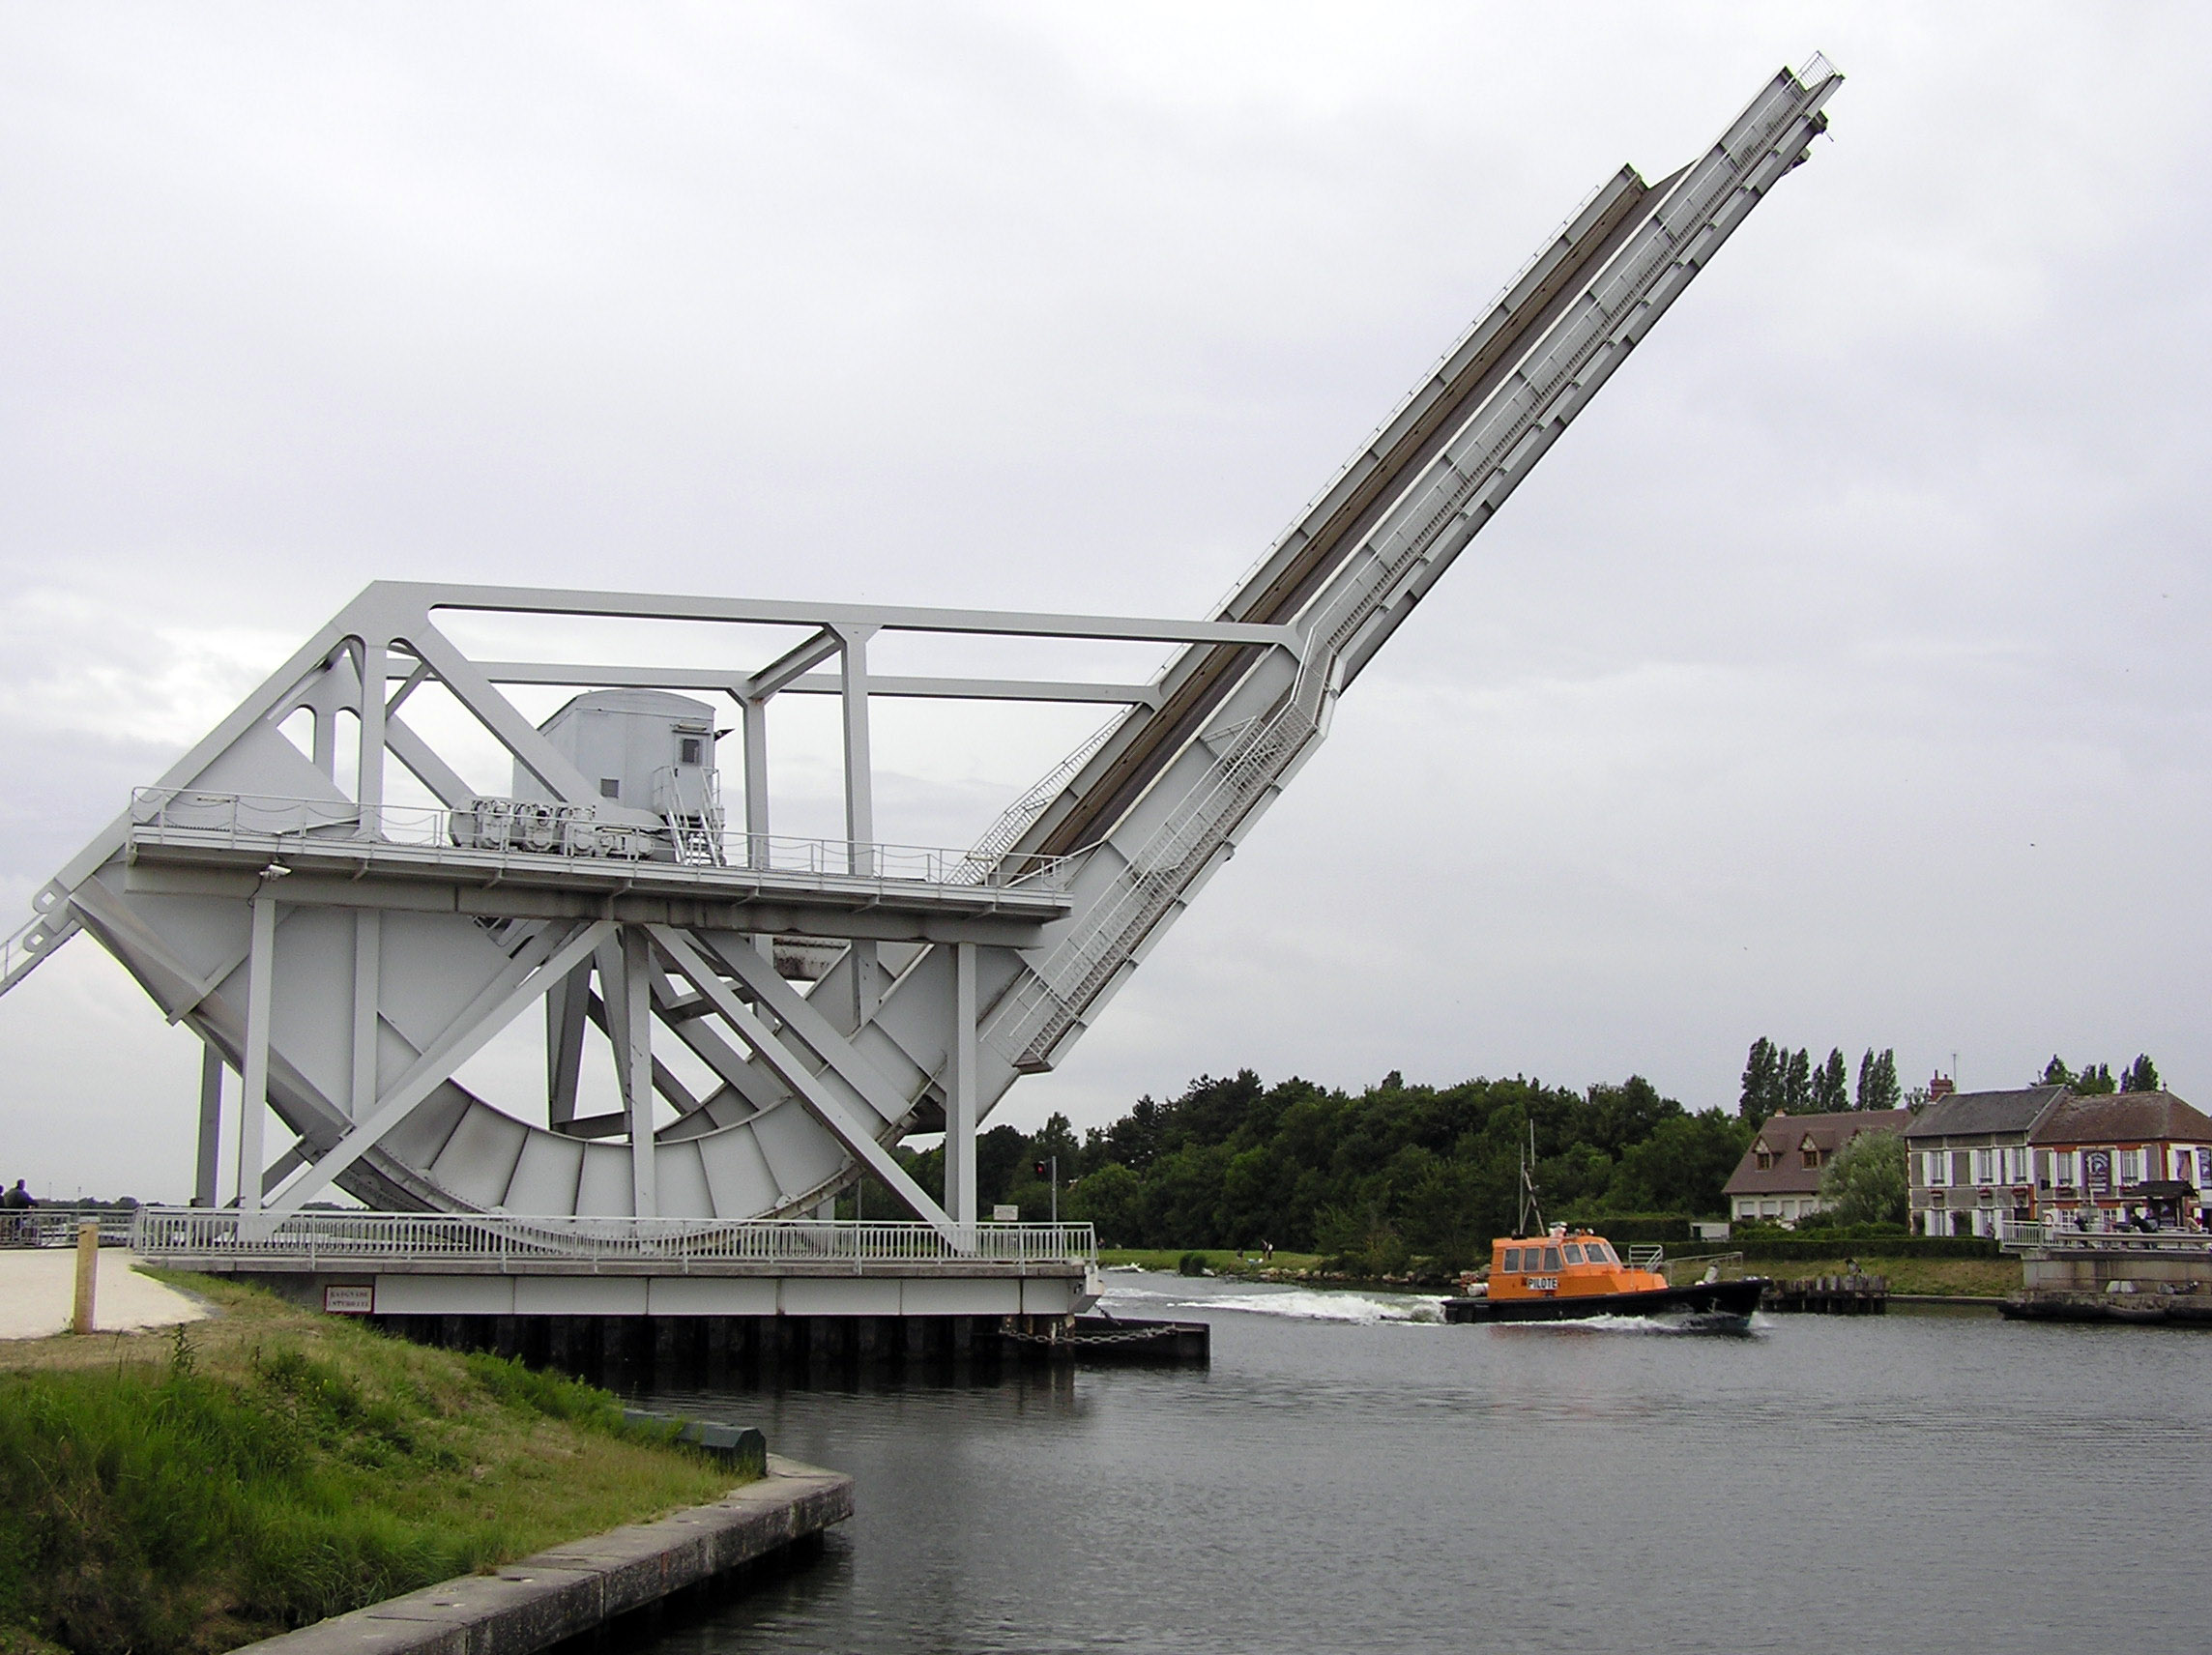 File:Pegasus bridge new.jpg - Wikipedia